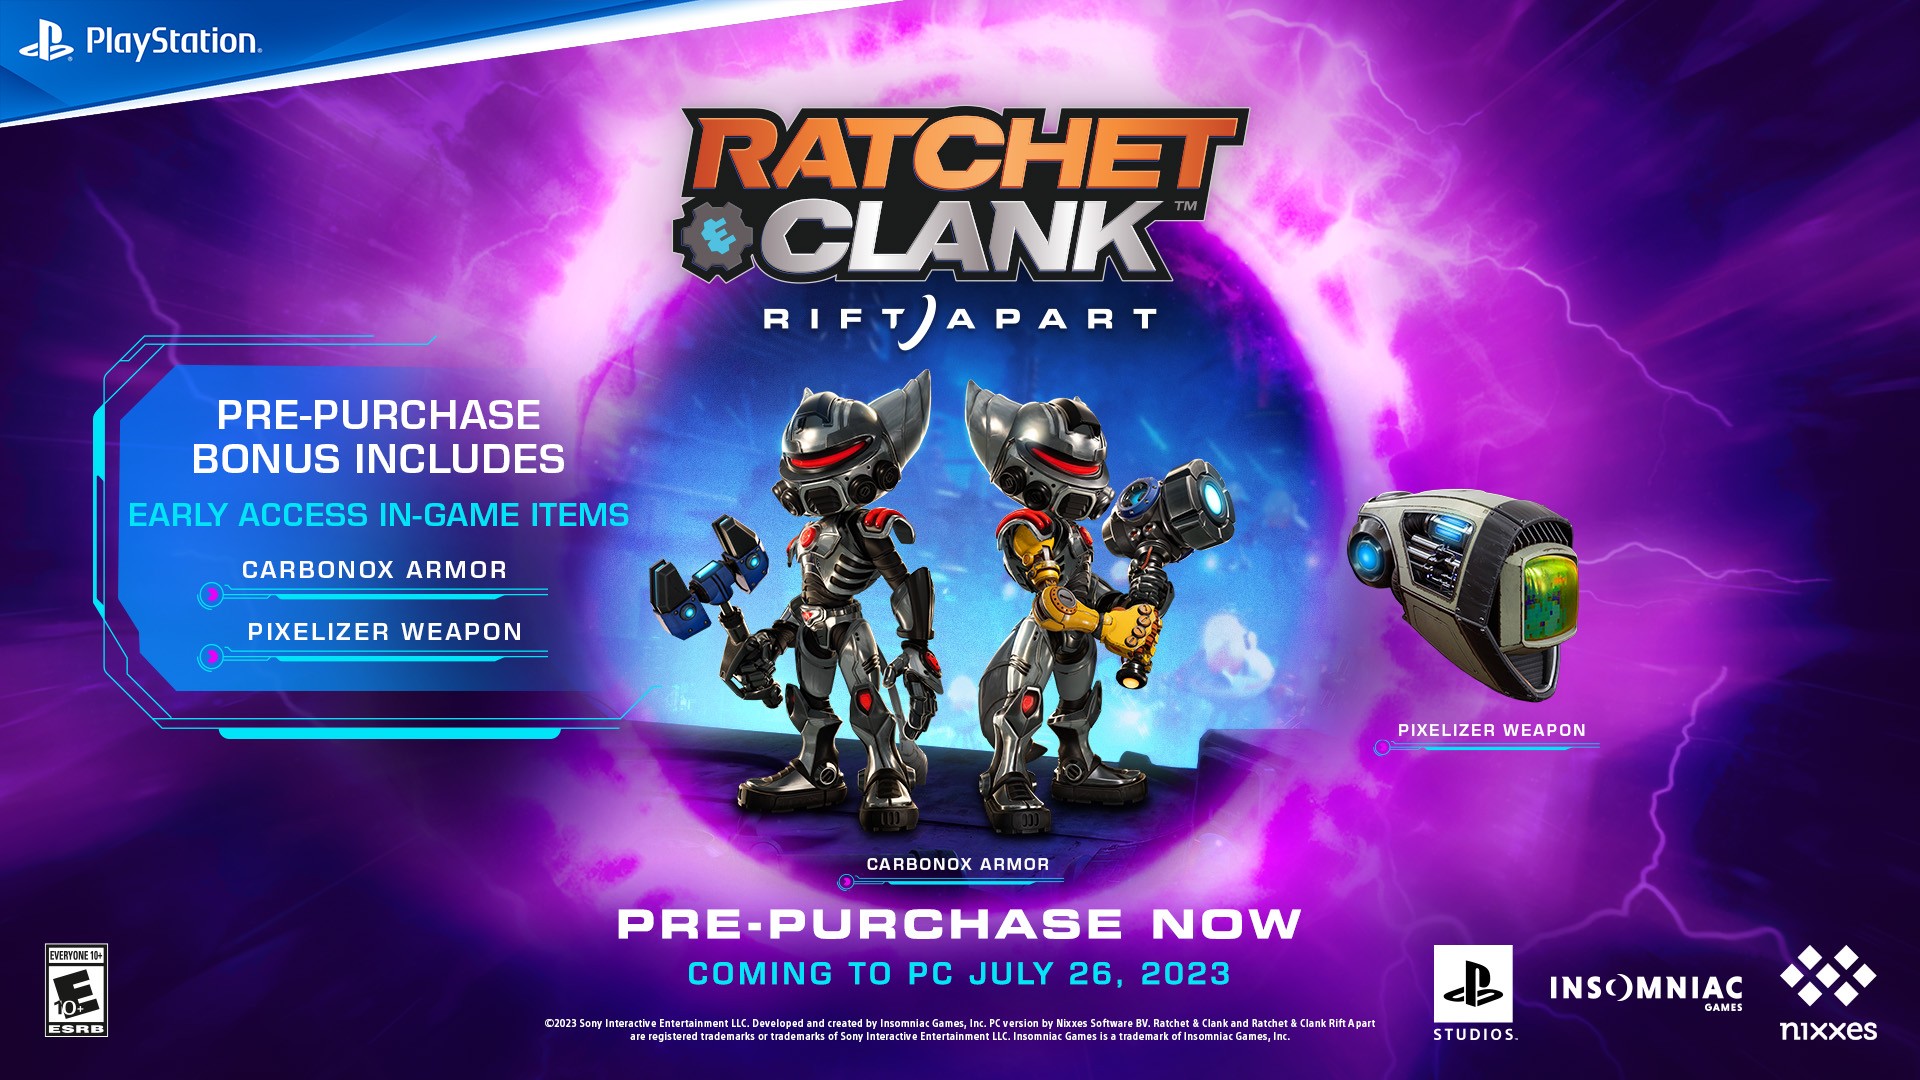 Ratchet & Clank PC